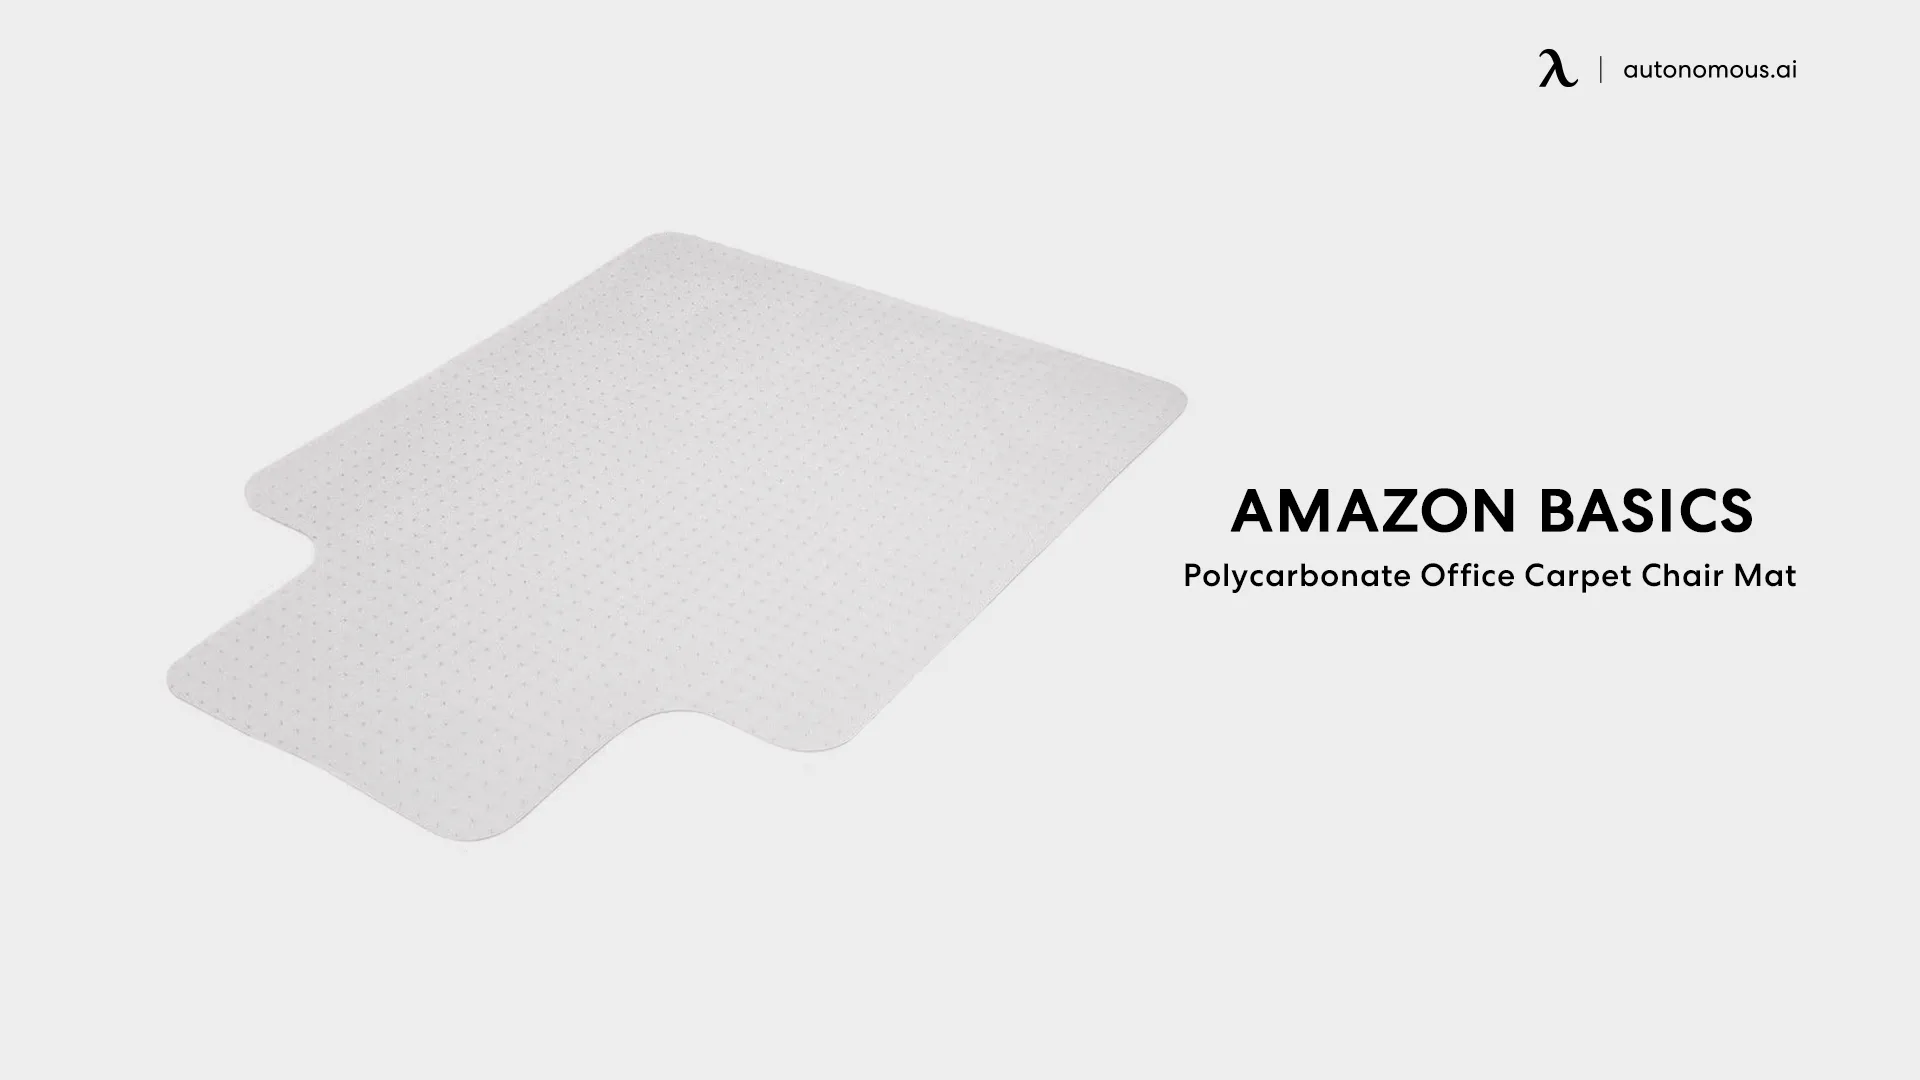 AmazonBasics Polycarbonate Office Carpet Chair Mat